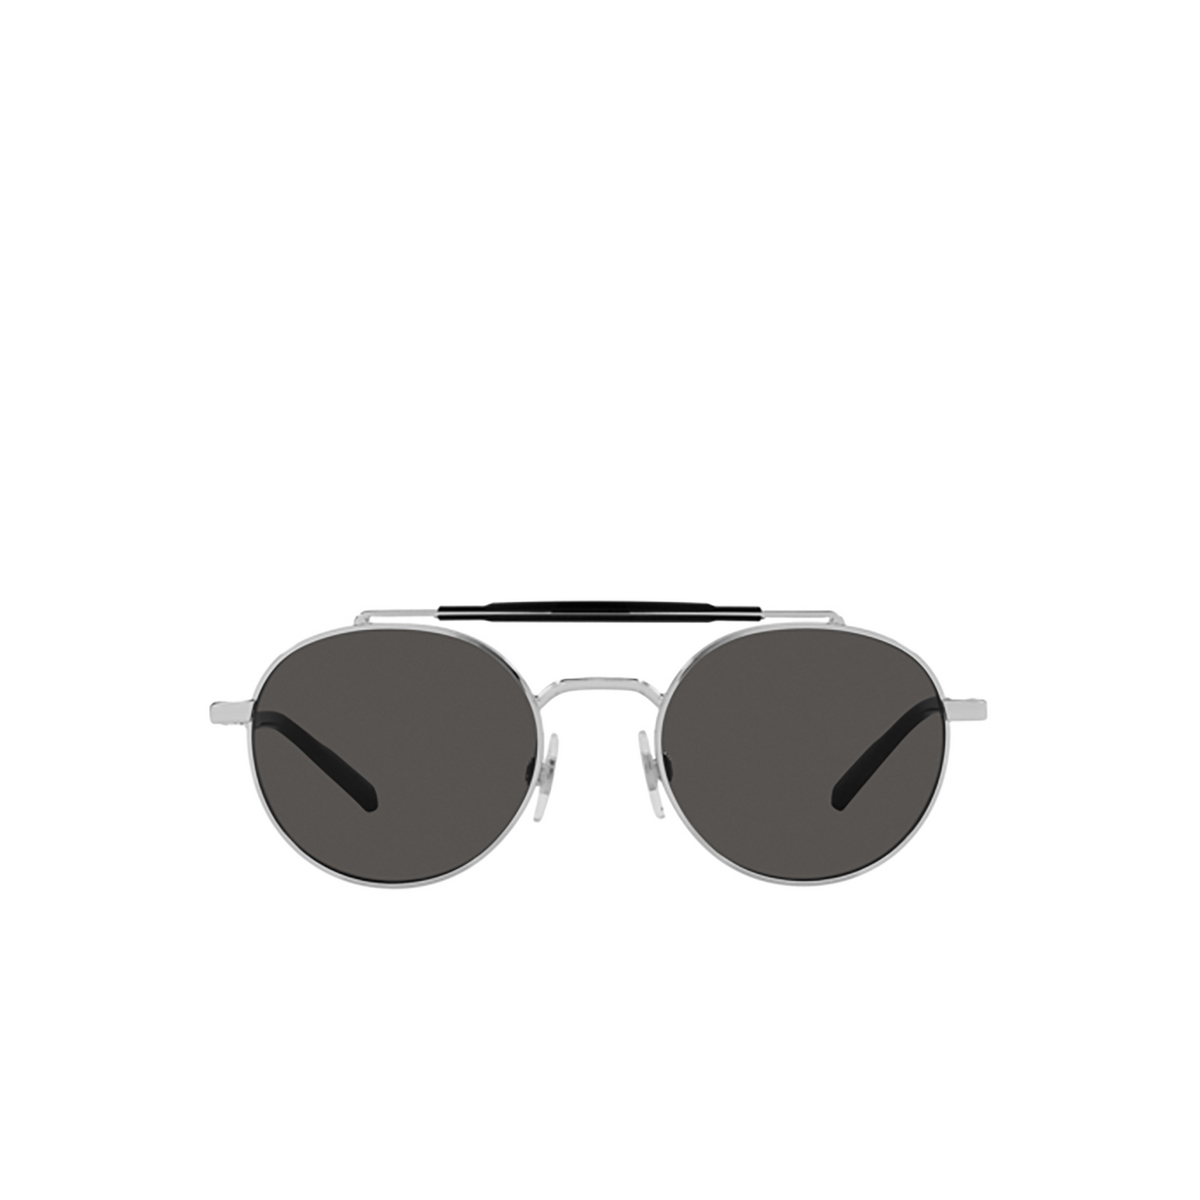 Dolce & Gabbana DG2295 Sunglasses 05/87 Silver - front view